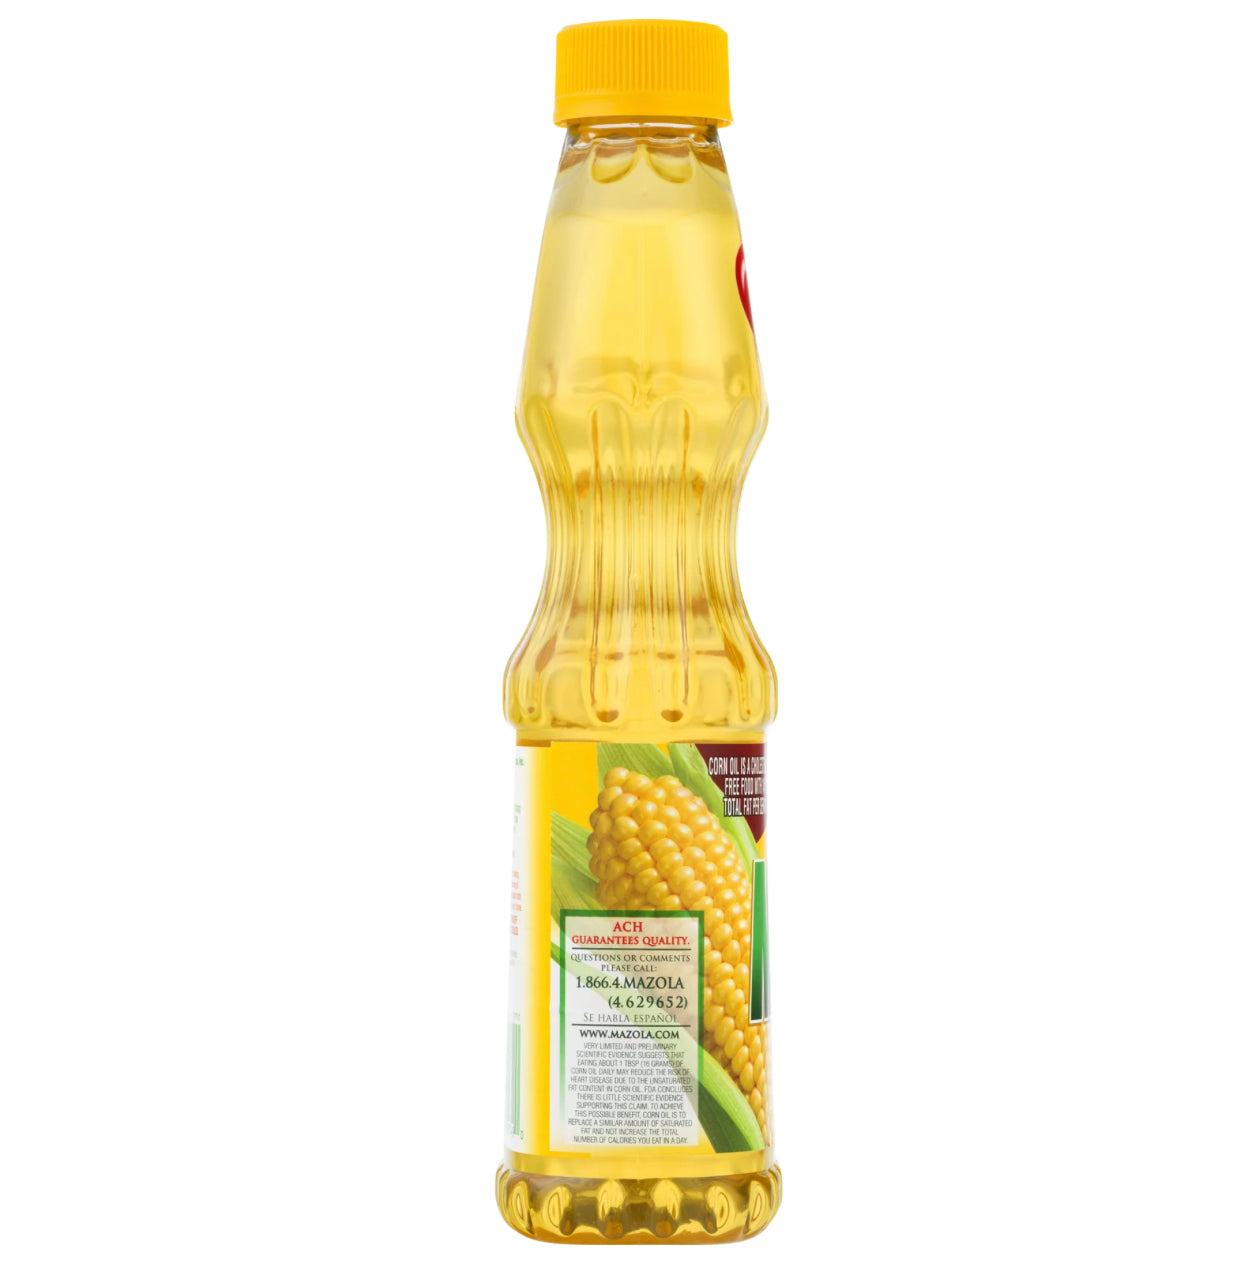 Mazola Corn Oil 32oz